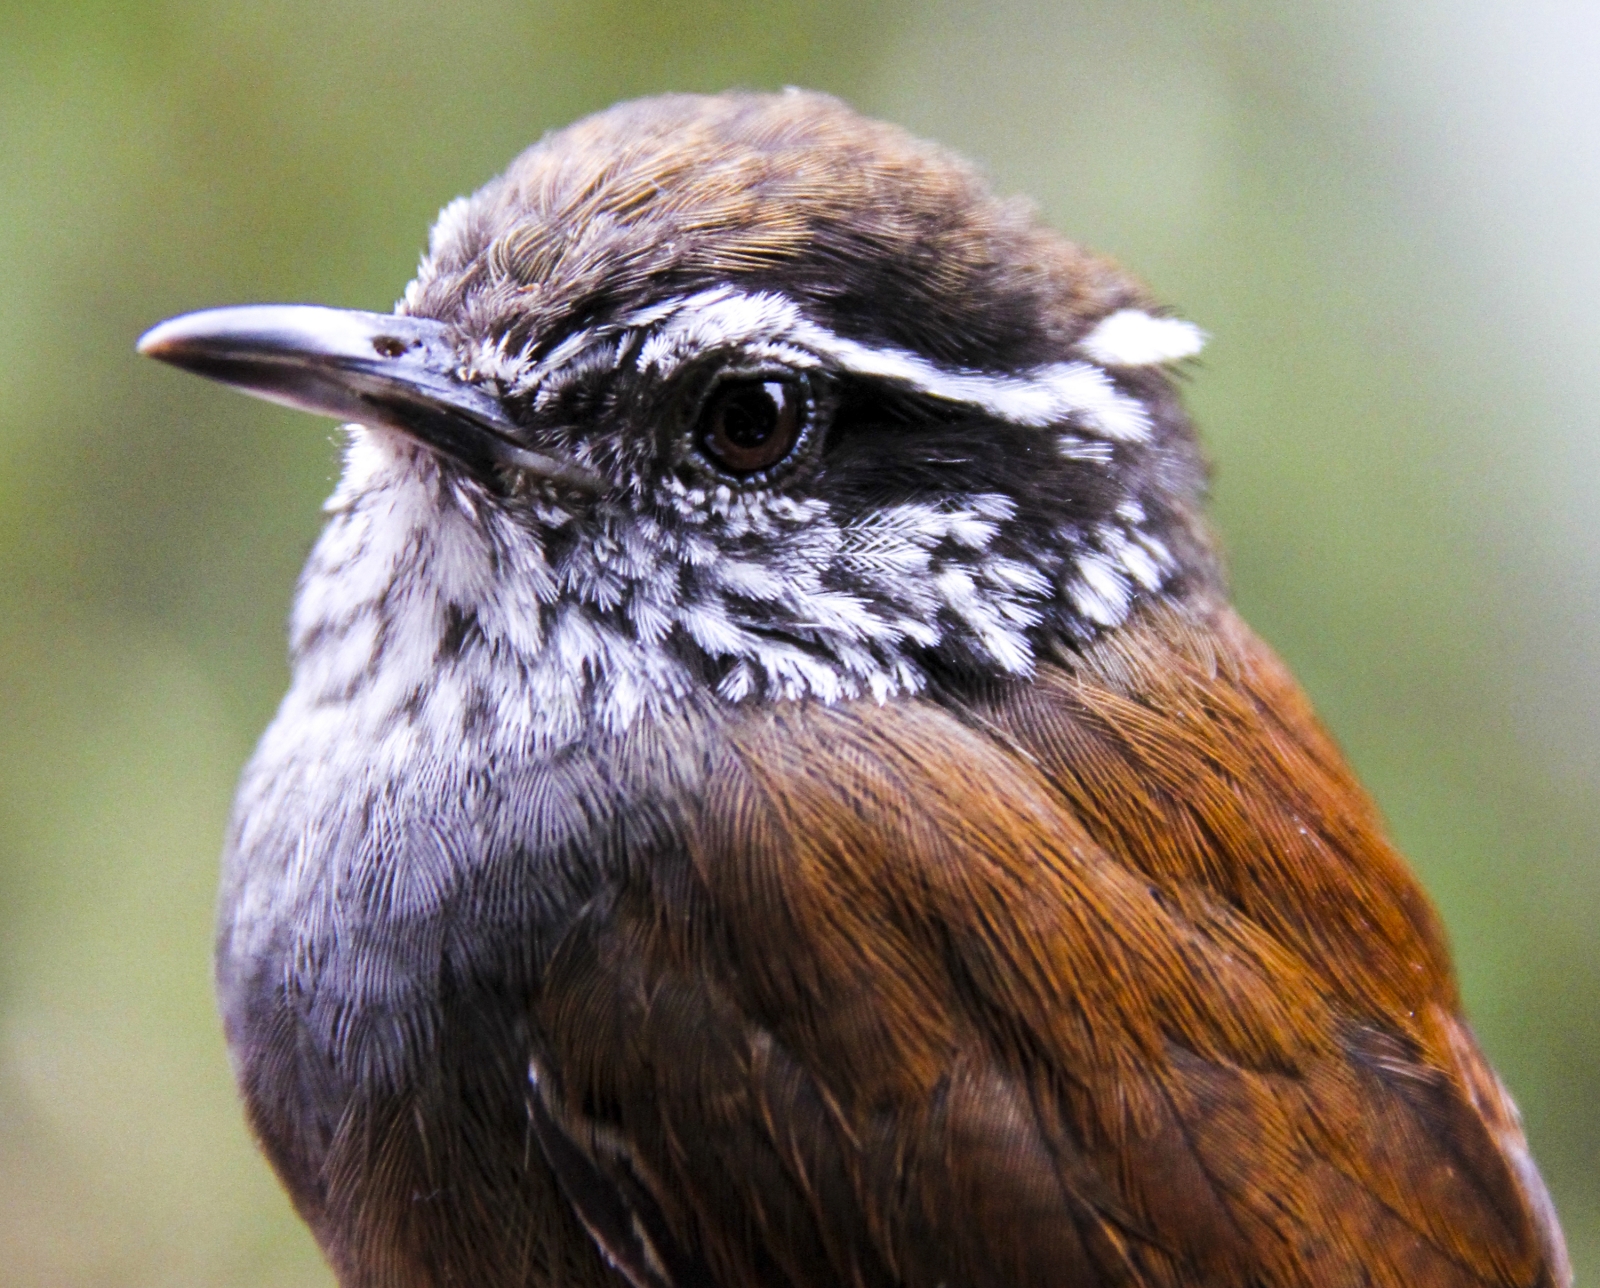 Endangered species Birds at risk of extinction due to